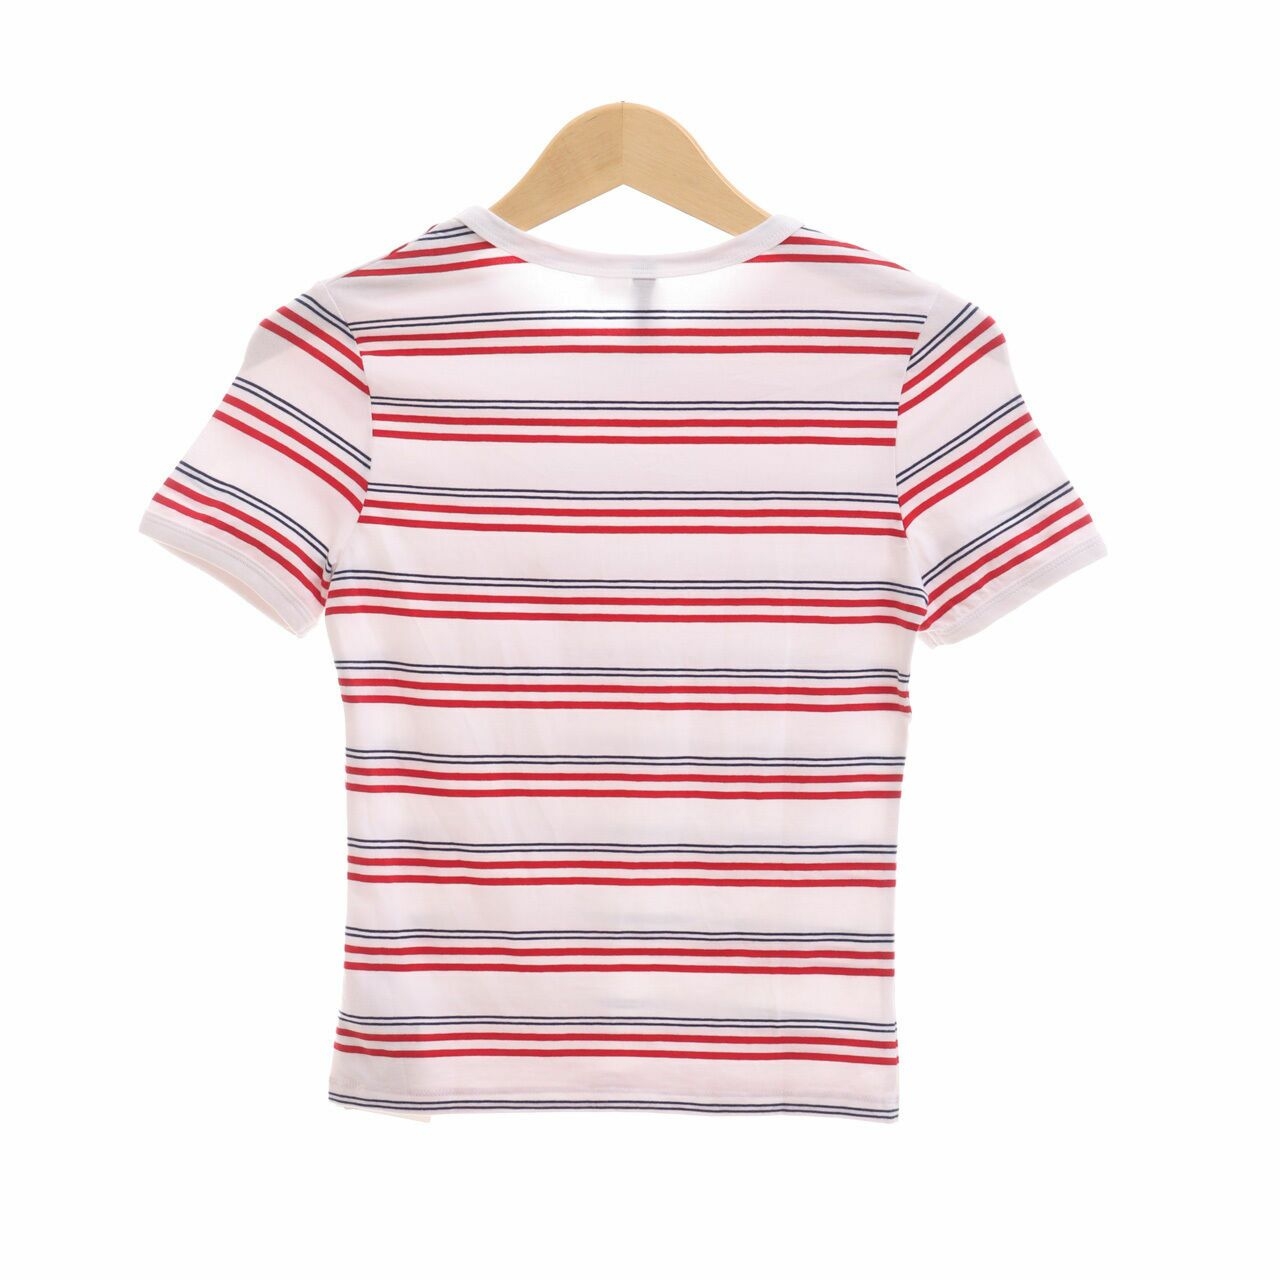 H&M Red & White Stripes T-Shirt